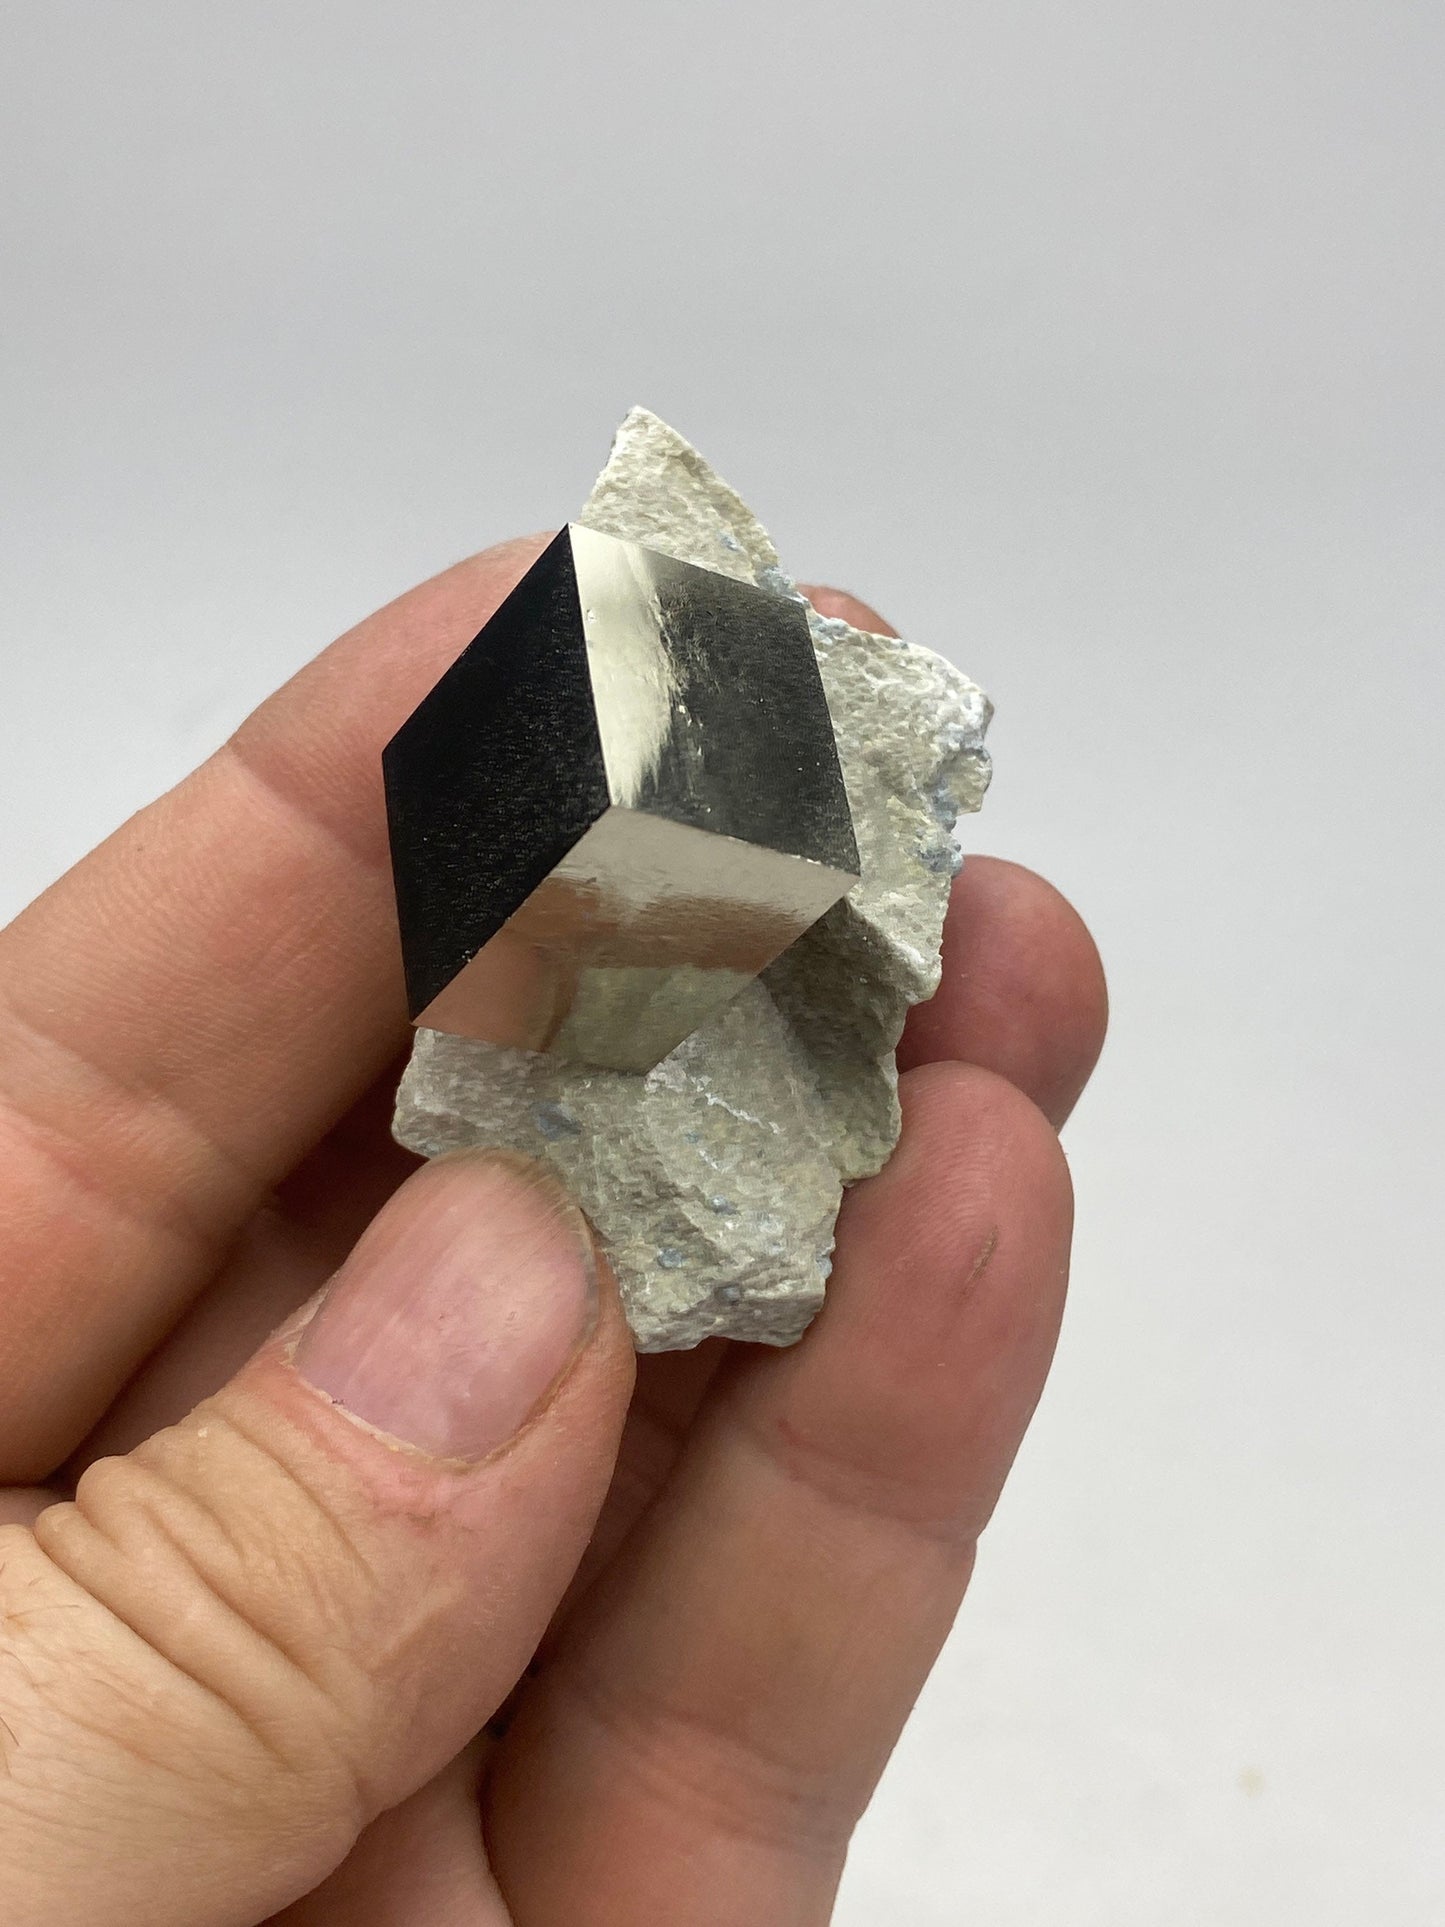 Medium Pyrite cube crystals from Navajun Spain